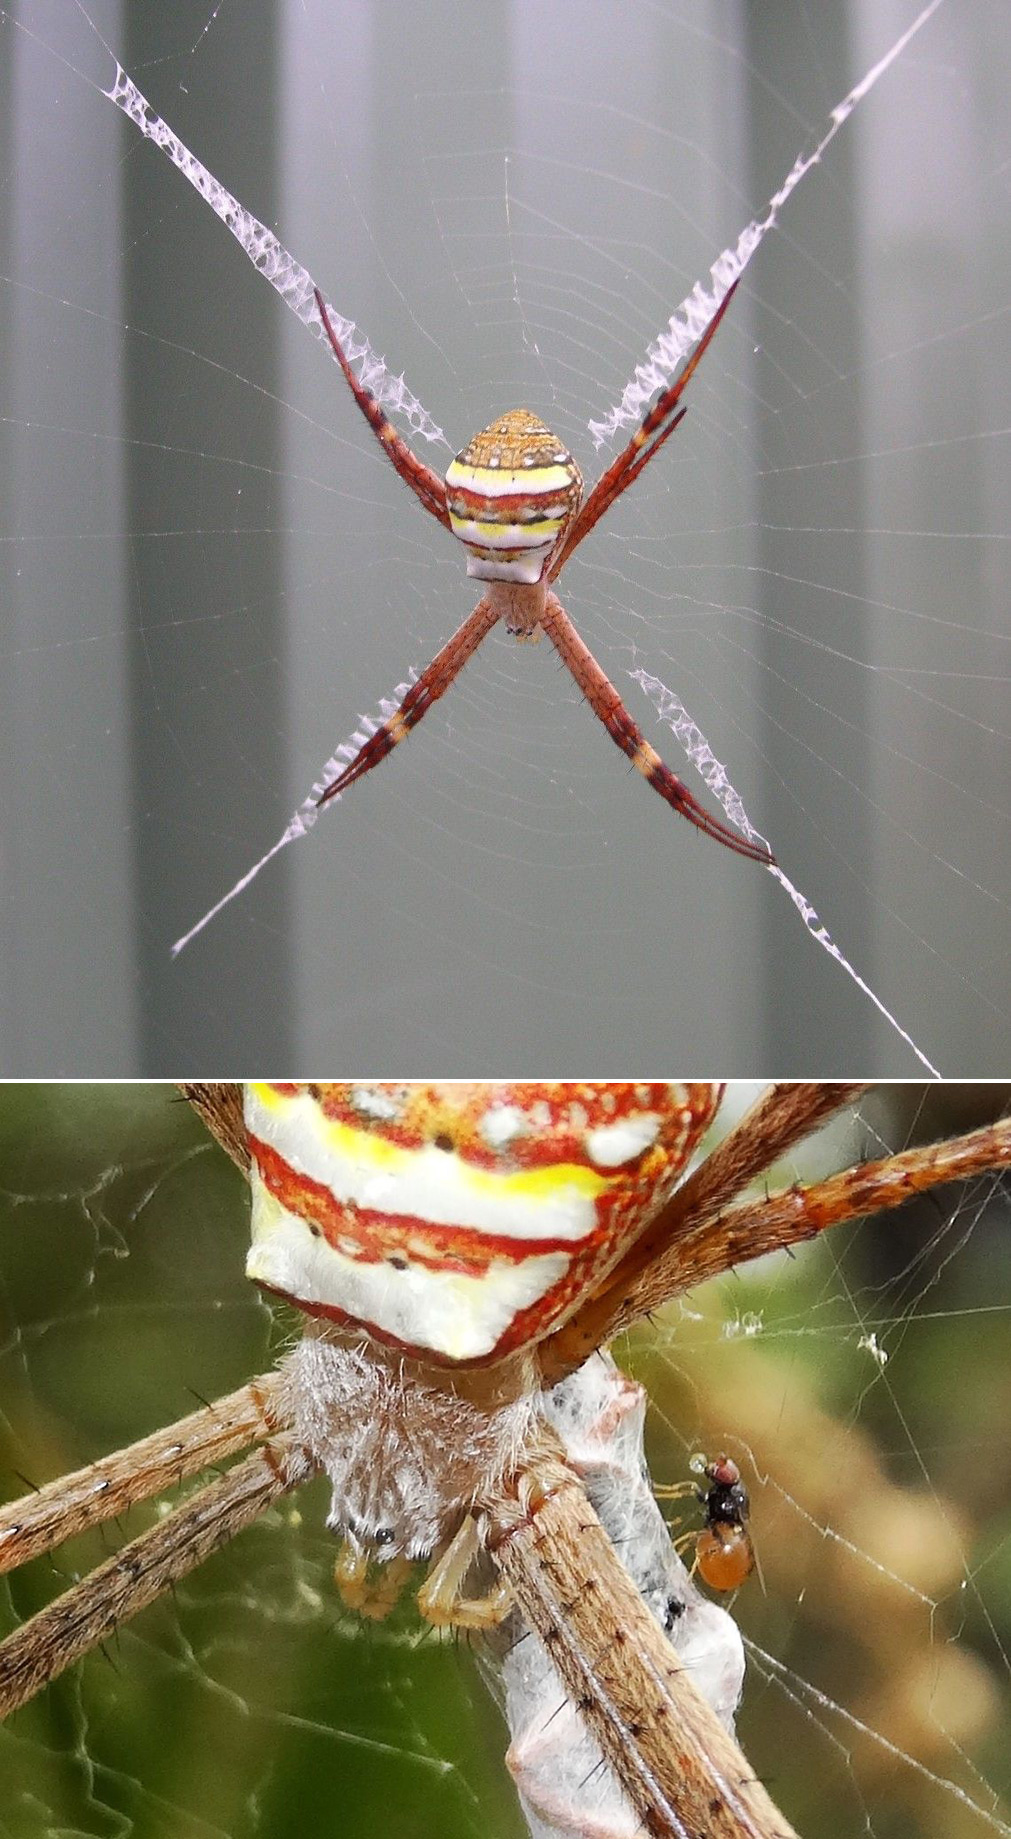 St. Andrews Cross spider, found in Austrlia (of course)